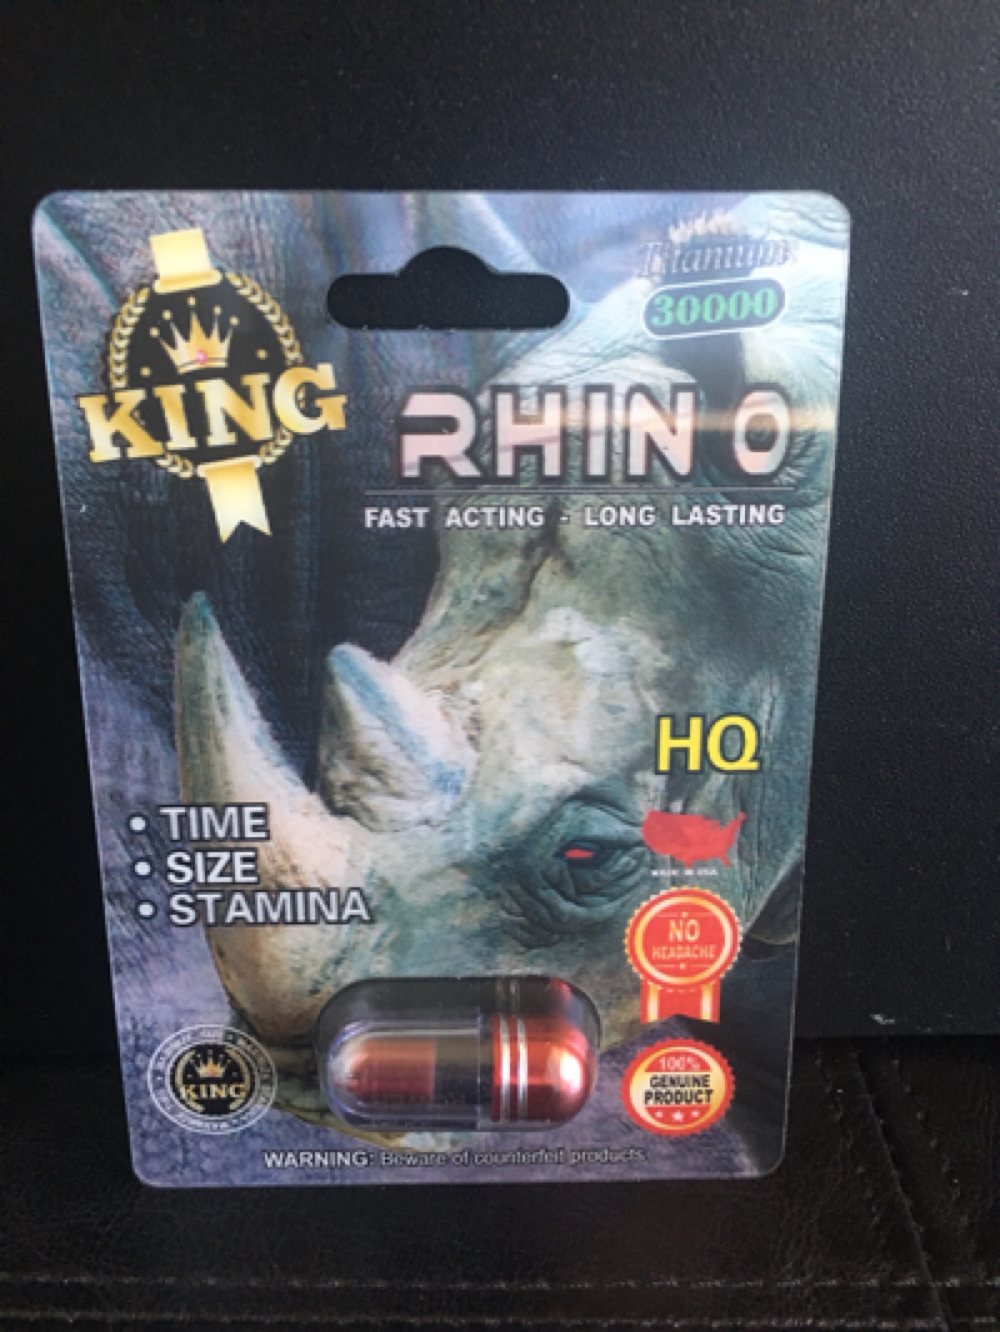 KING RHINO TITANIUM 30000 SUPER MALE ENHANCEMENT PILLS ( 5 PACK ) - $27.99